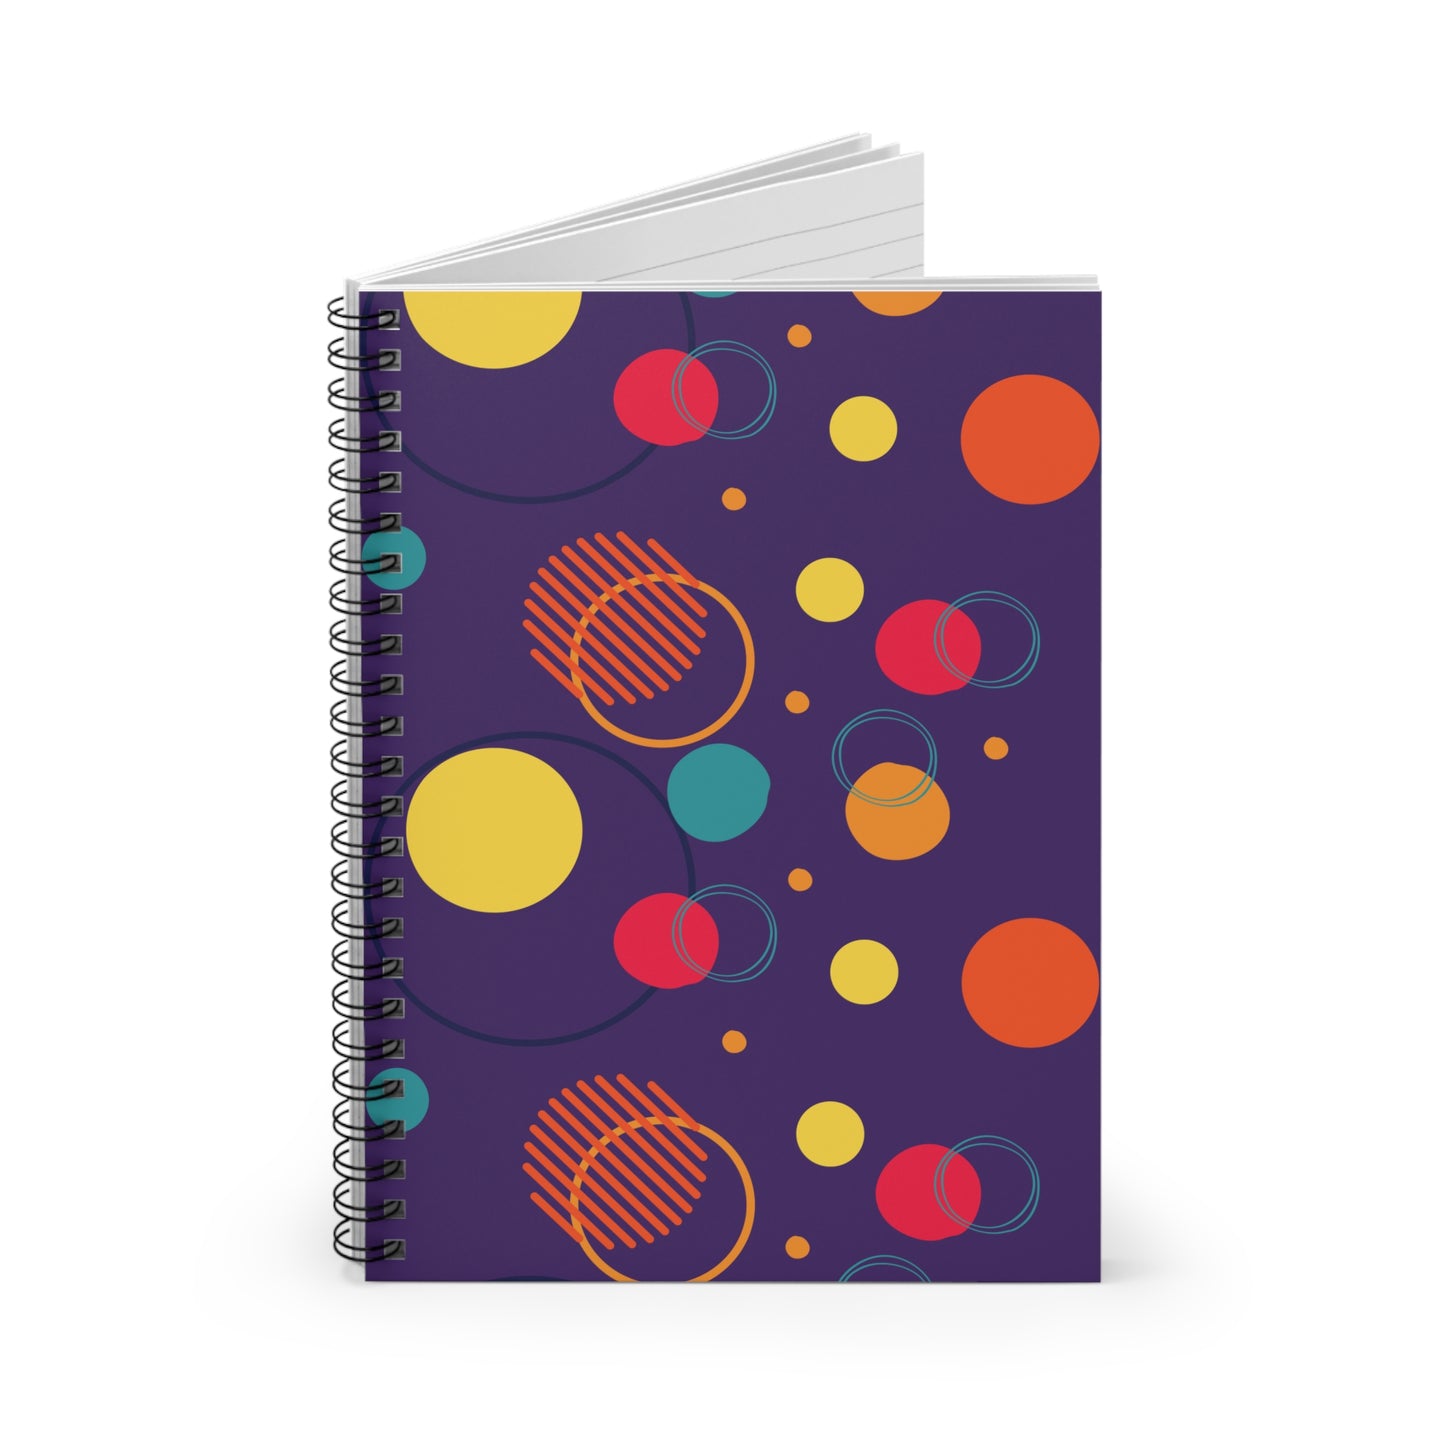 Rella B Spiral Notebook - Purple